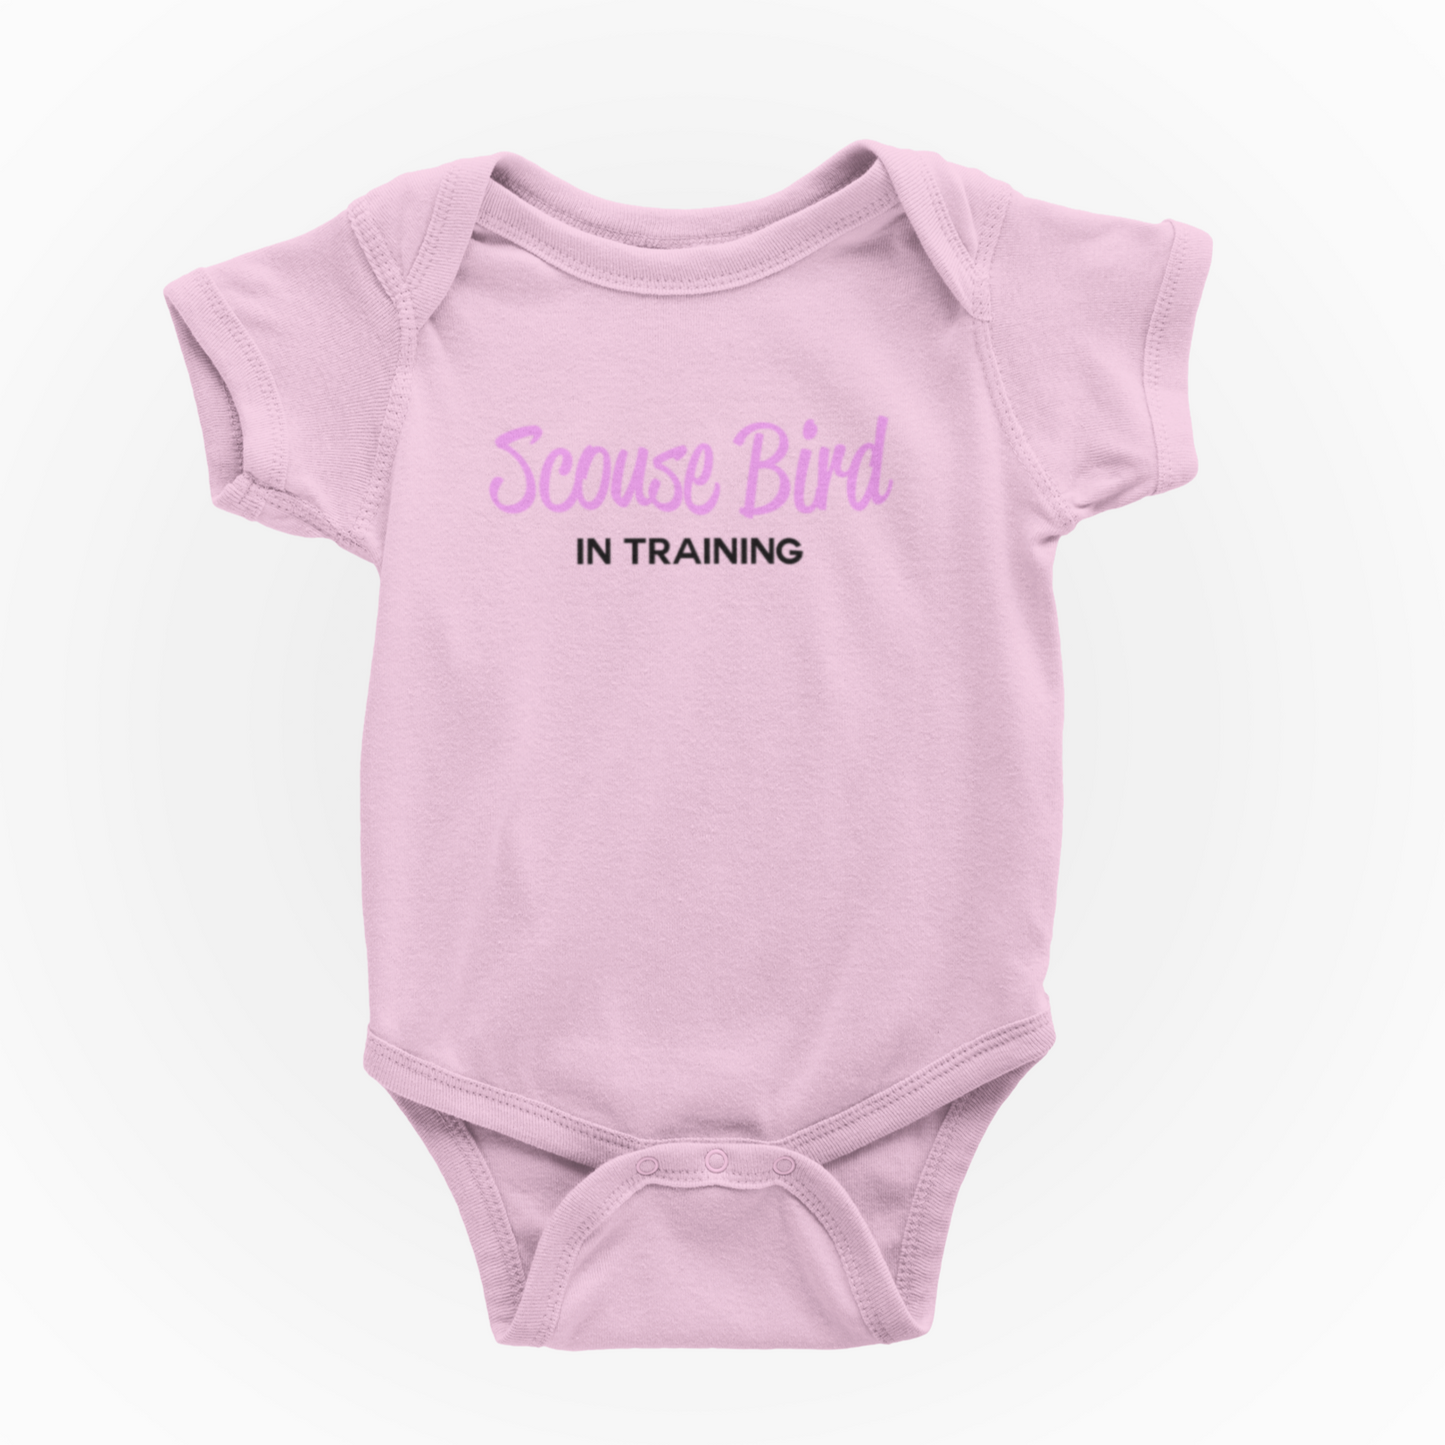 Scouse Bird In Training Baby Vest